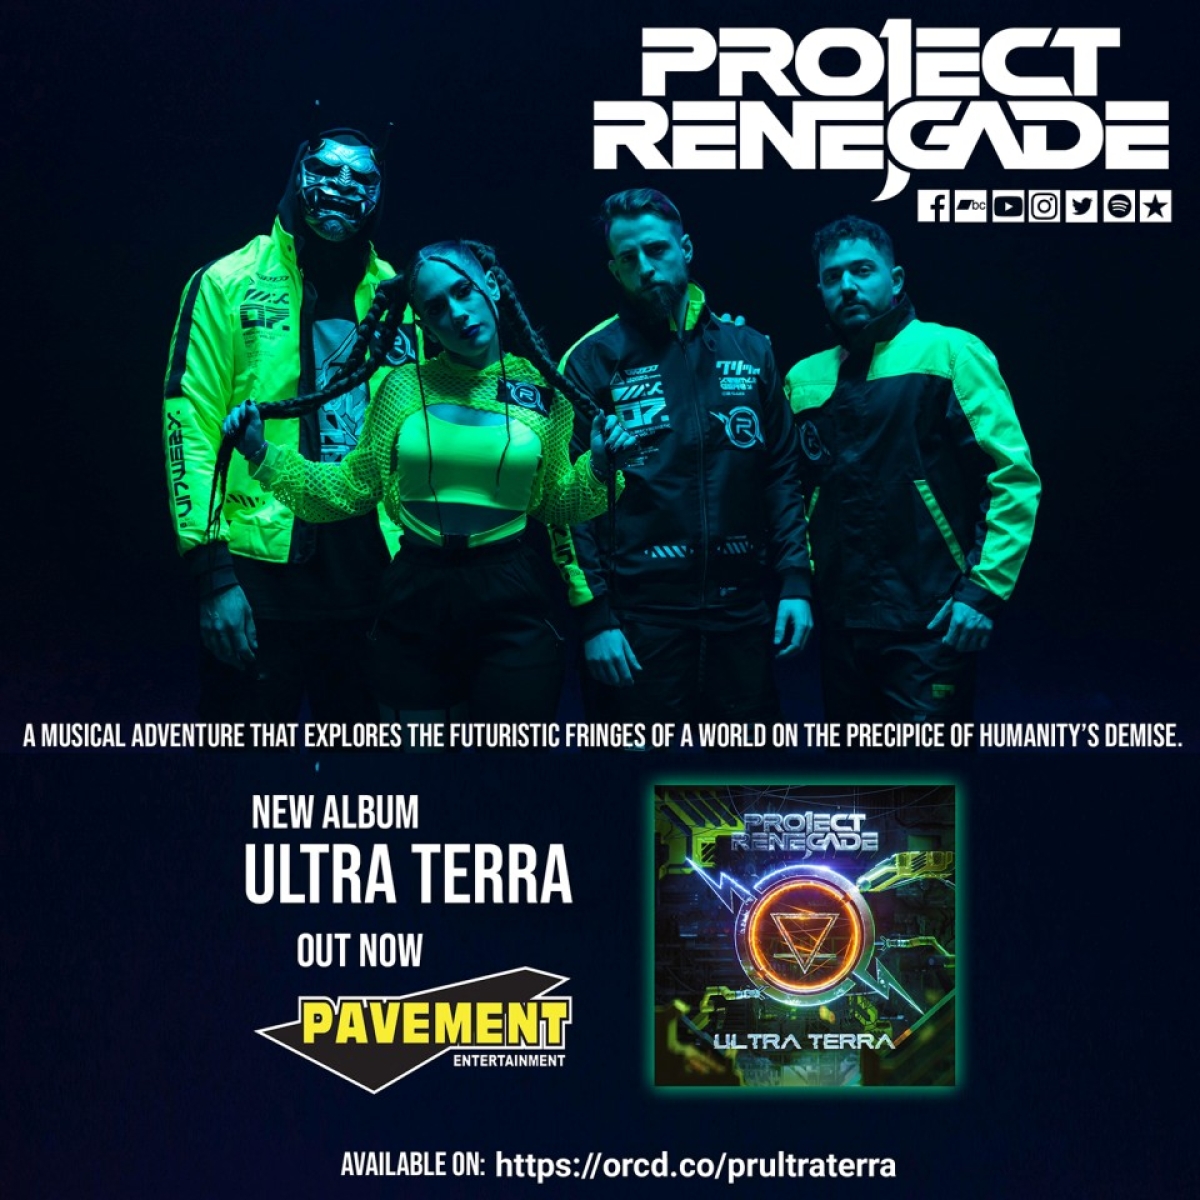 PROJECT RENEGADE – νέο άλμπουμ “Ultra Terra” από την Pavement Entertainment